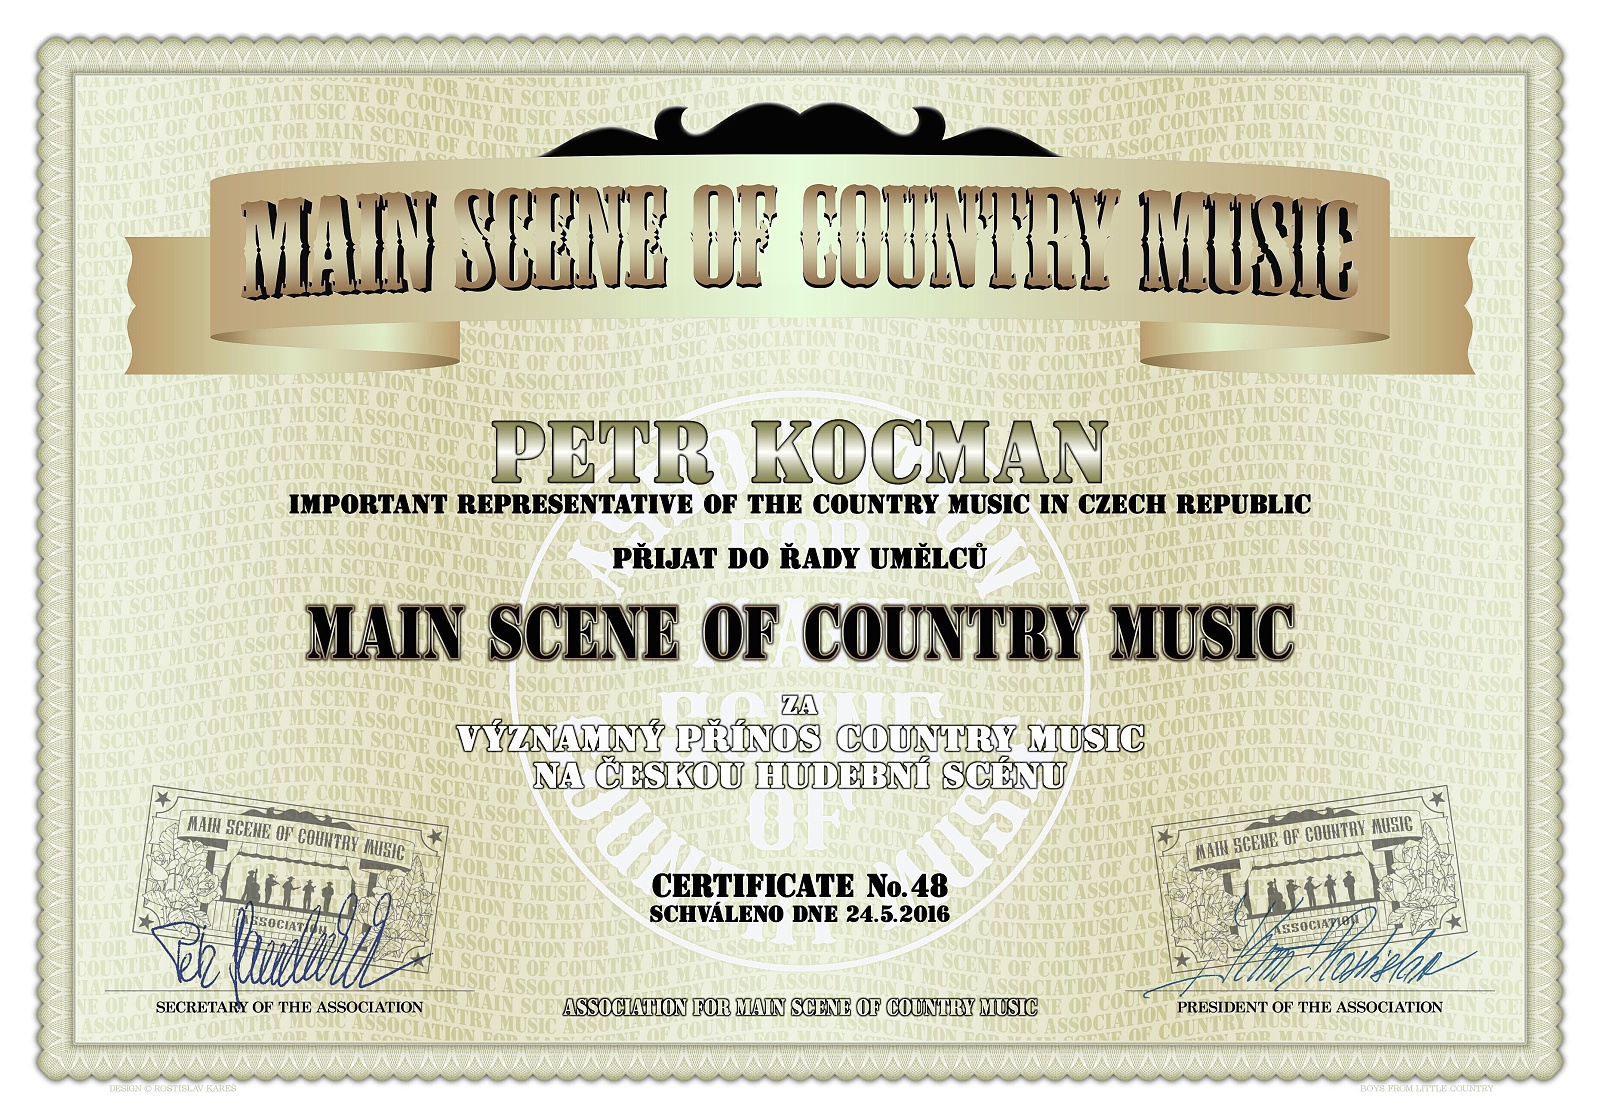 CE 48 - Main Scene of Country Music